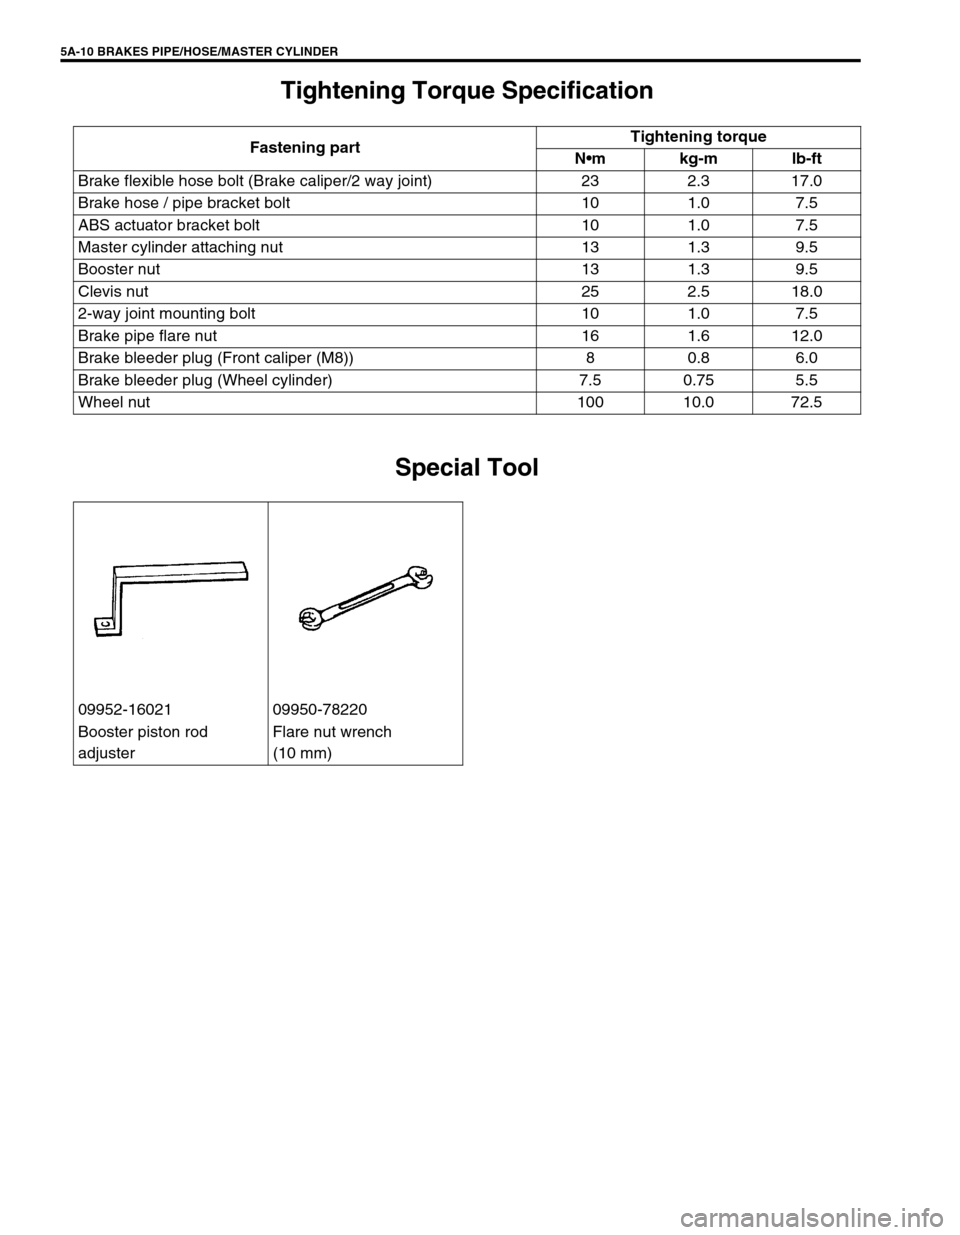 SUZUKI GRAND VITARA 2001 2.G Owners Manual 5A-10 BRAKES PIPE/HOSE/MASTER CYLINDER
Tightening Torque Specification
Special Tool
Fastening partTightening torque
Nm kg-m lb-ft
Brake flexible hose bolt (Brake caliper/2 way joint) 23 2.3 17.0
Brak